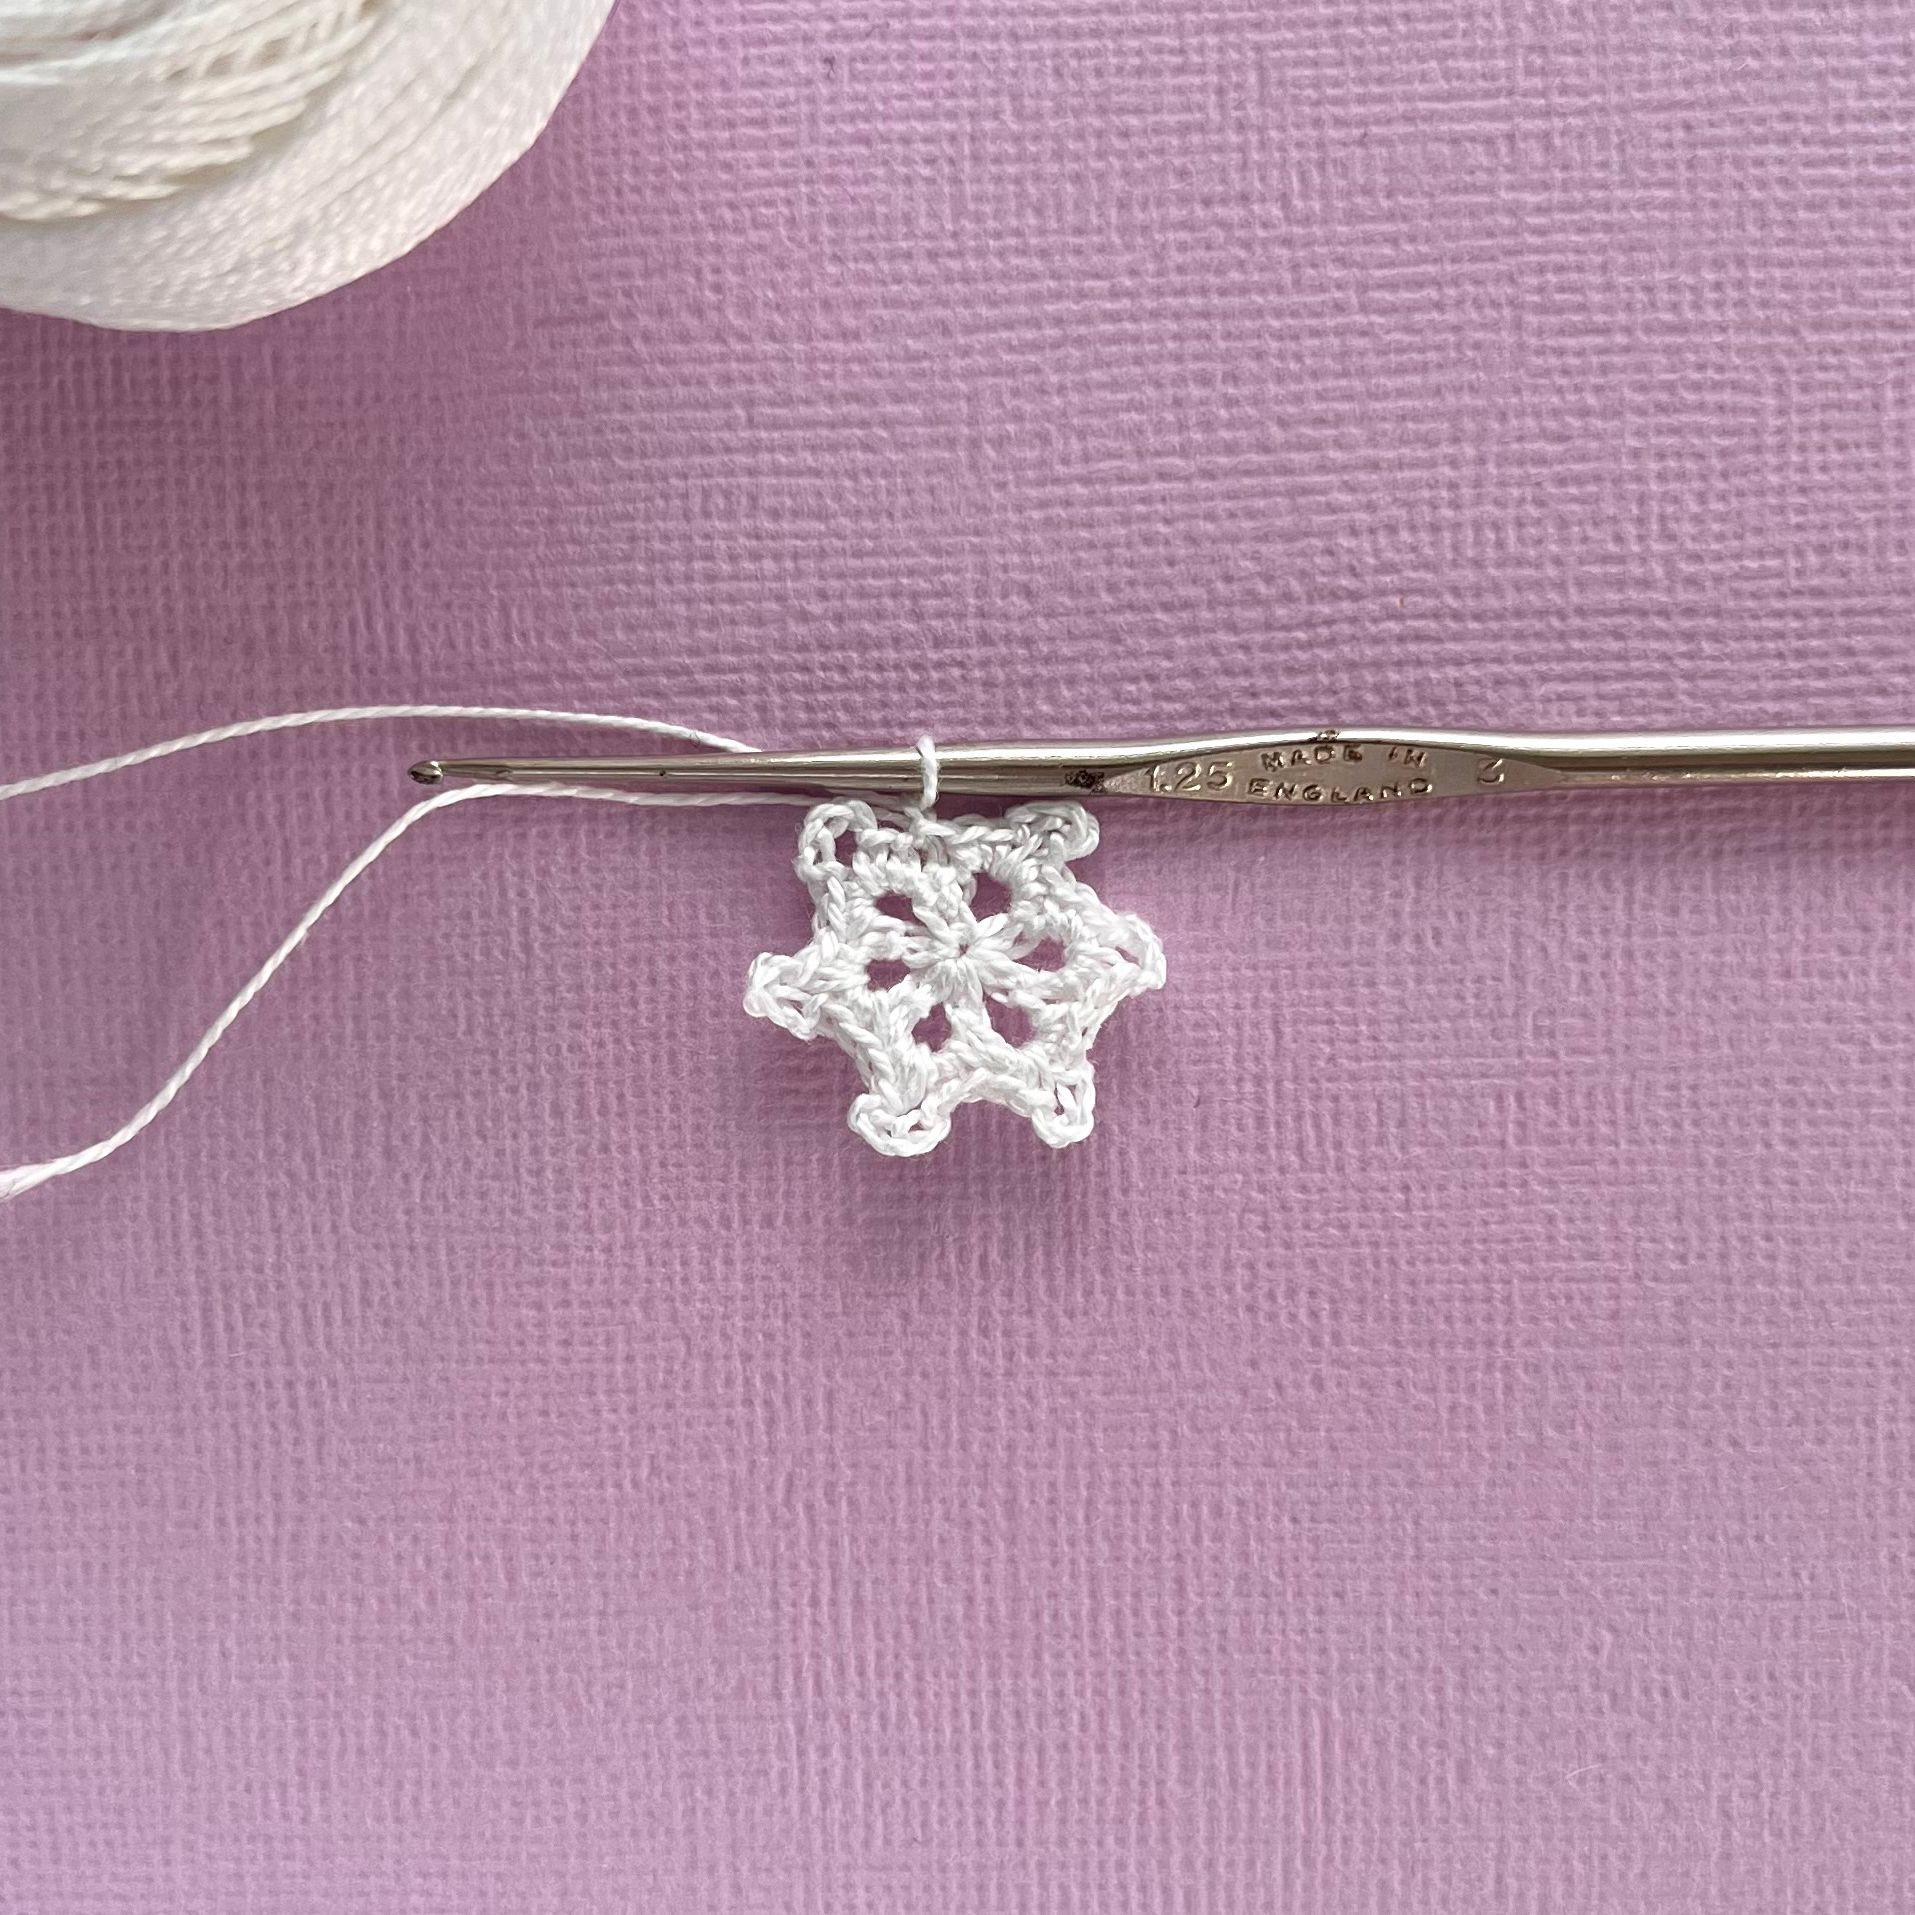 crochet snowflake pattern